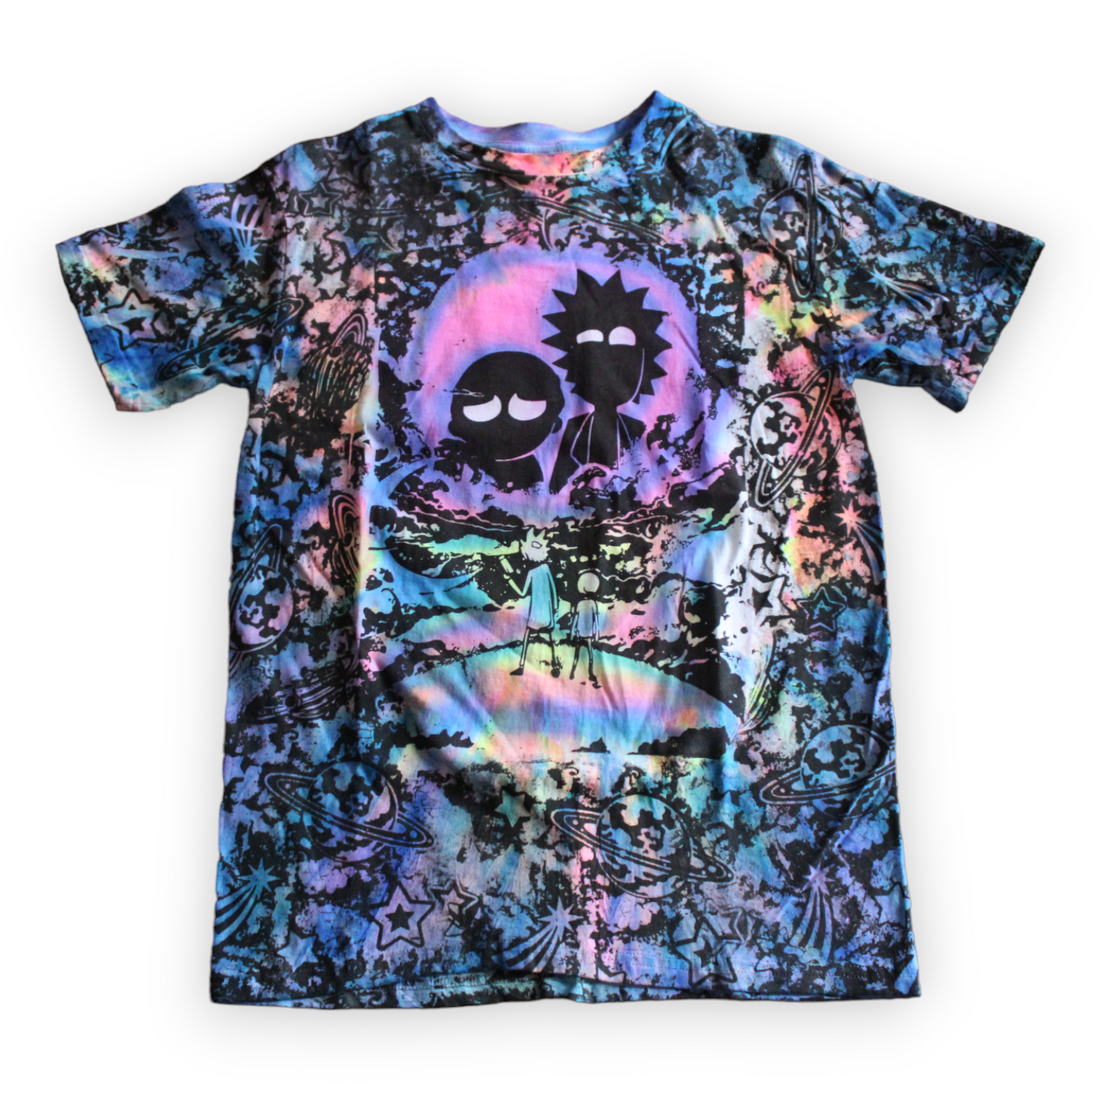 Cosmic Rick & Morty Space-Themed Tie Dye Shirt 